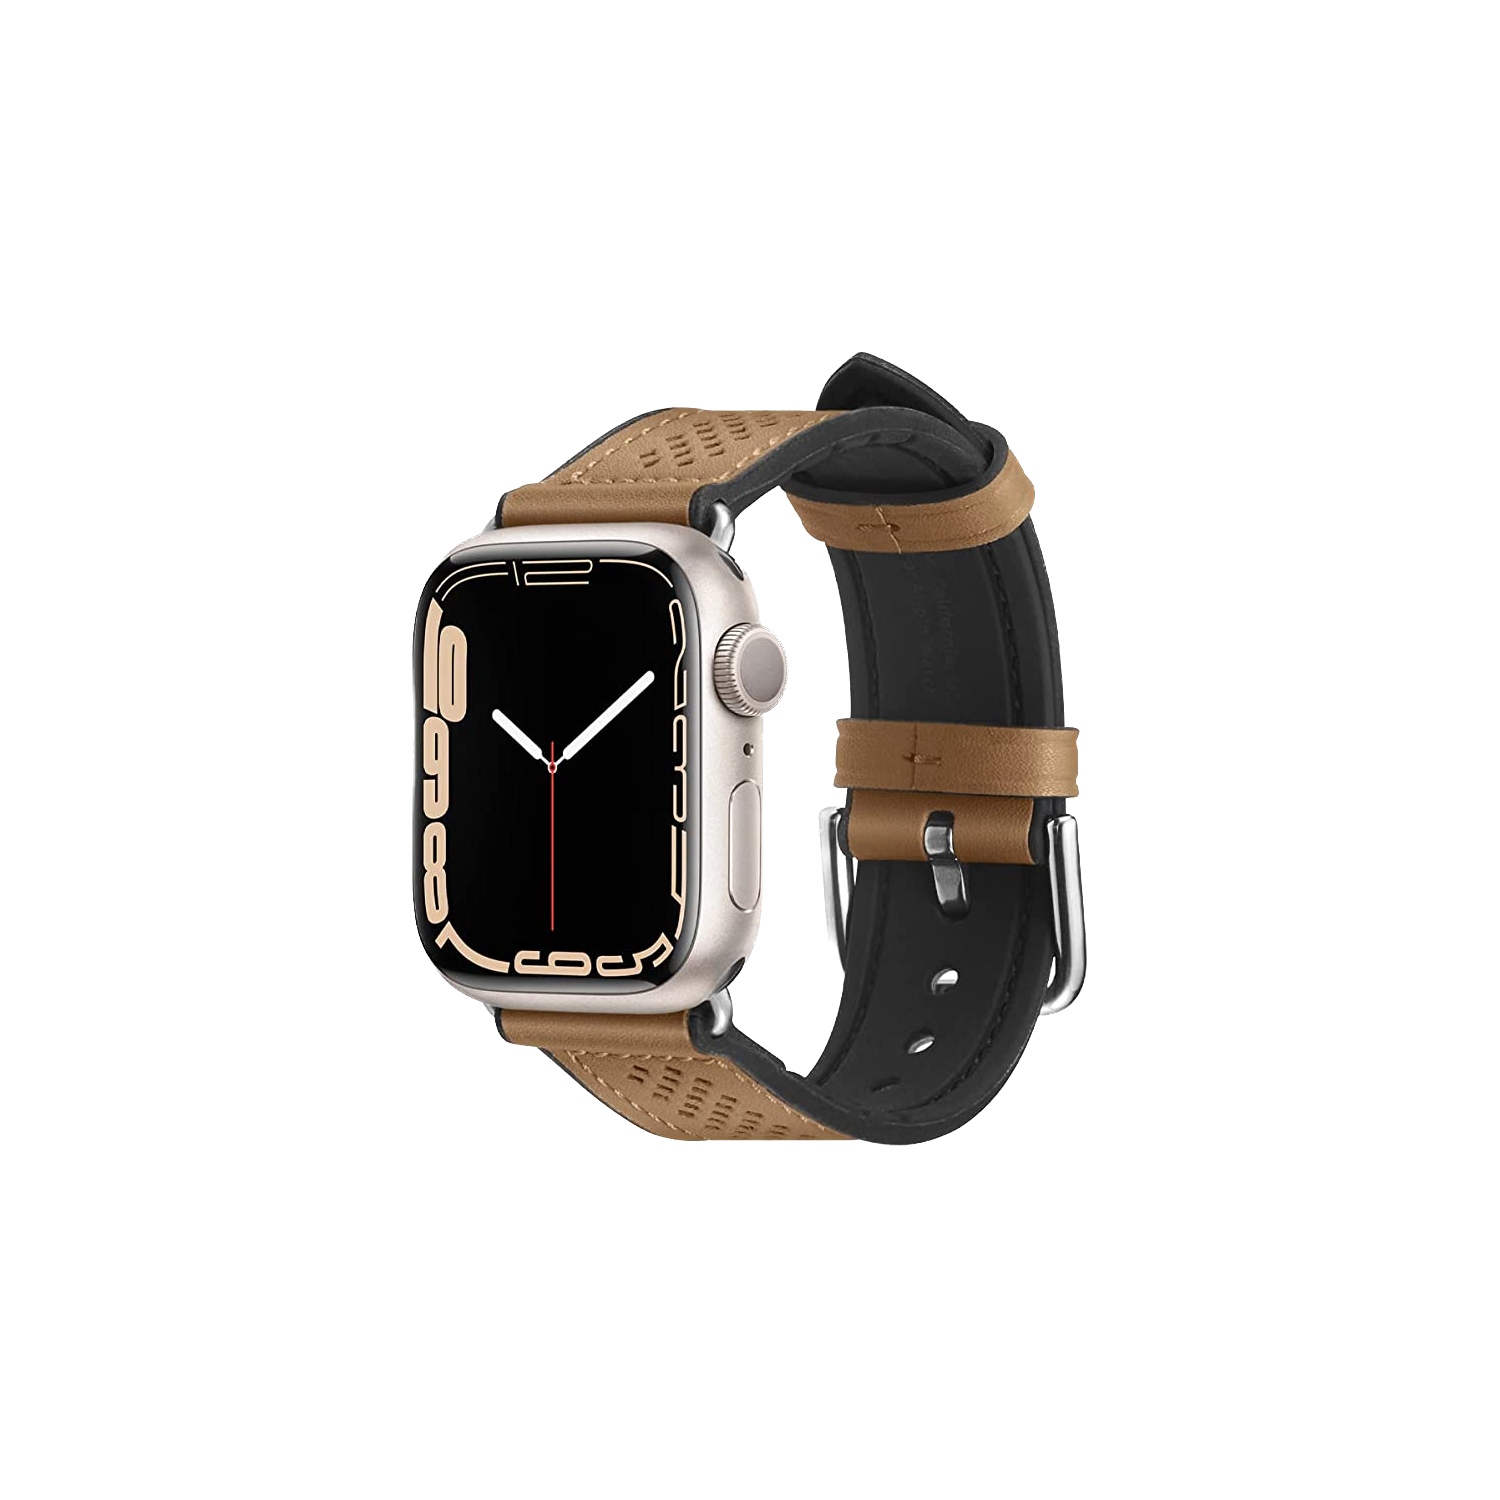 Apple Watch Bands We Like